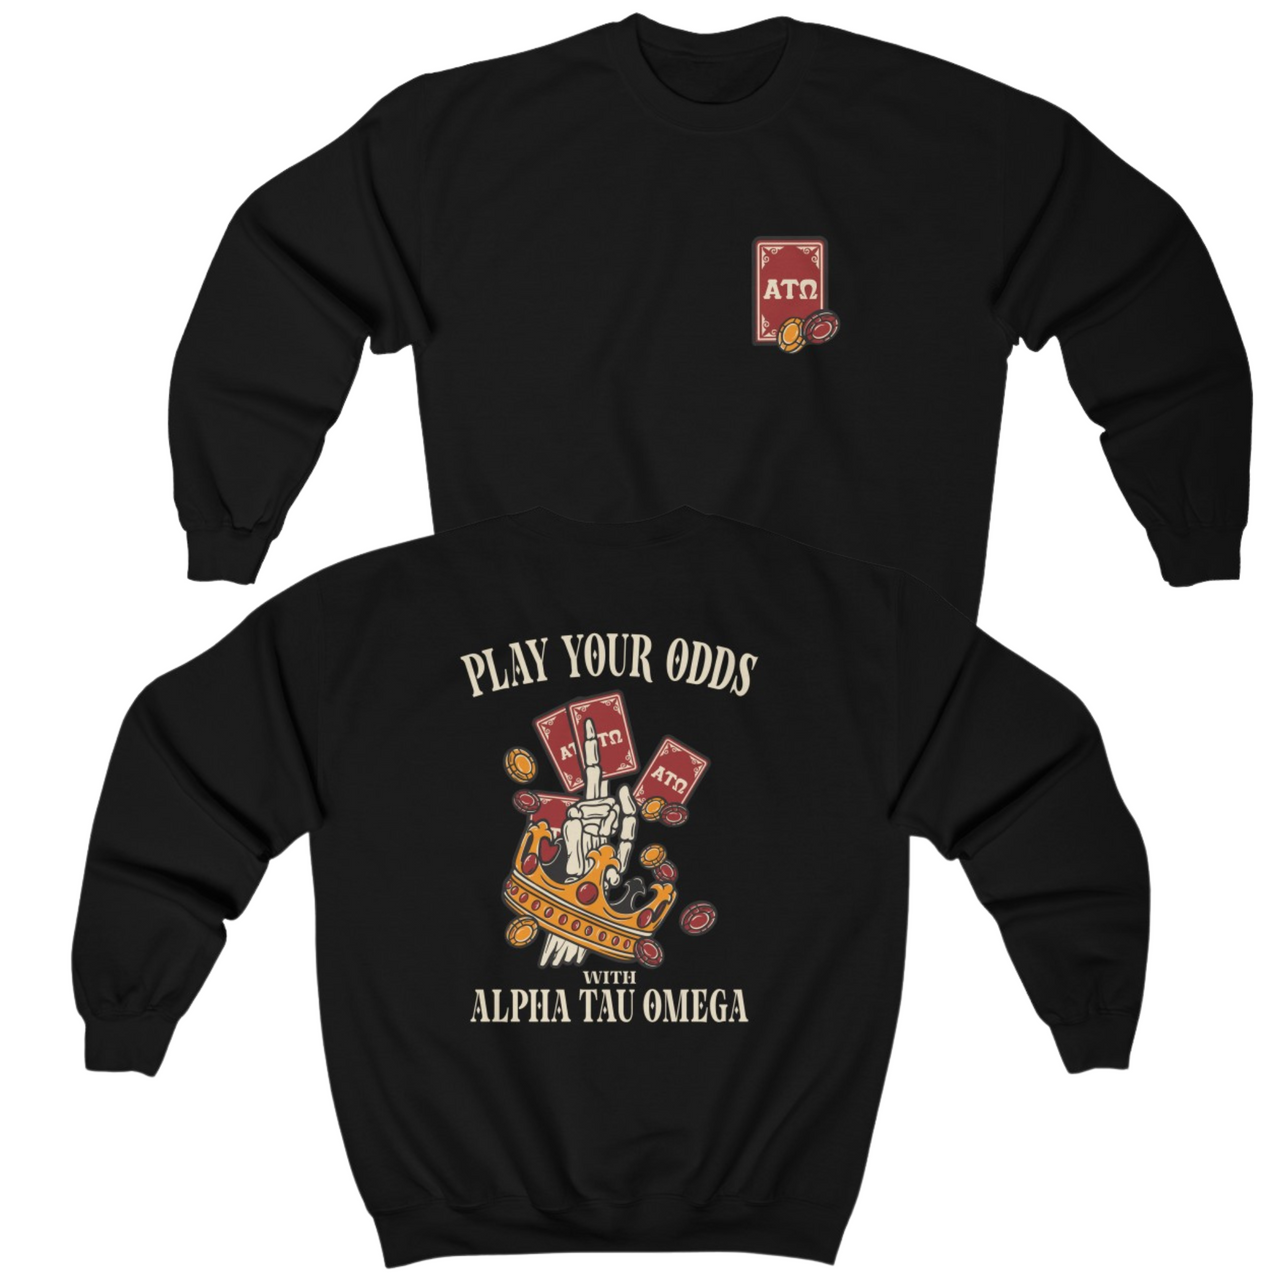 Black Alpha Tau Omega Graphic Crewneck Sweatshirt | Play Your Odds | Alpha Tau Omega Fraternity Merchandise 